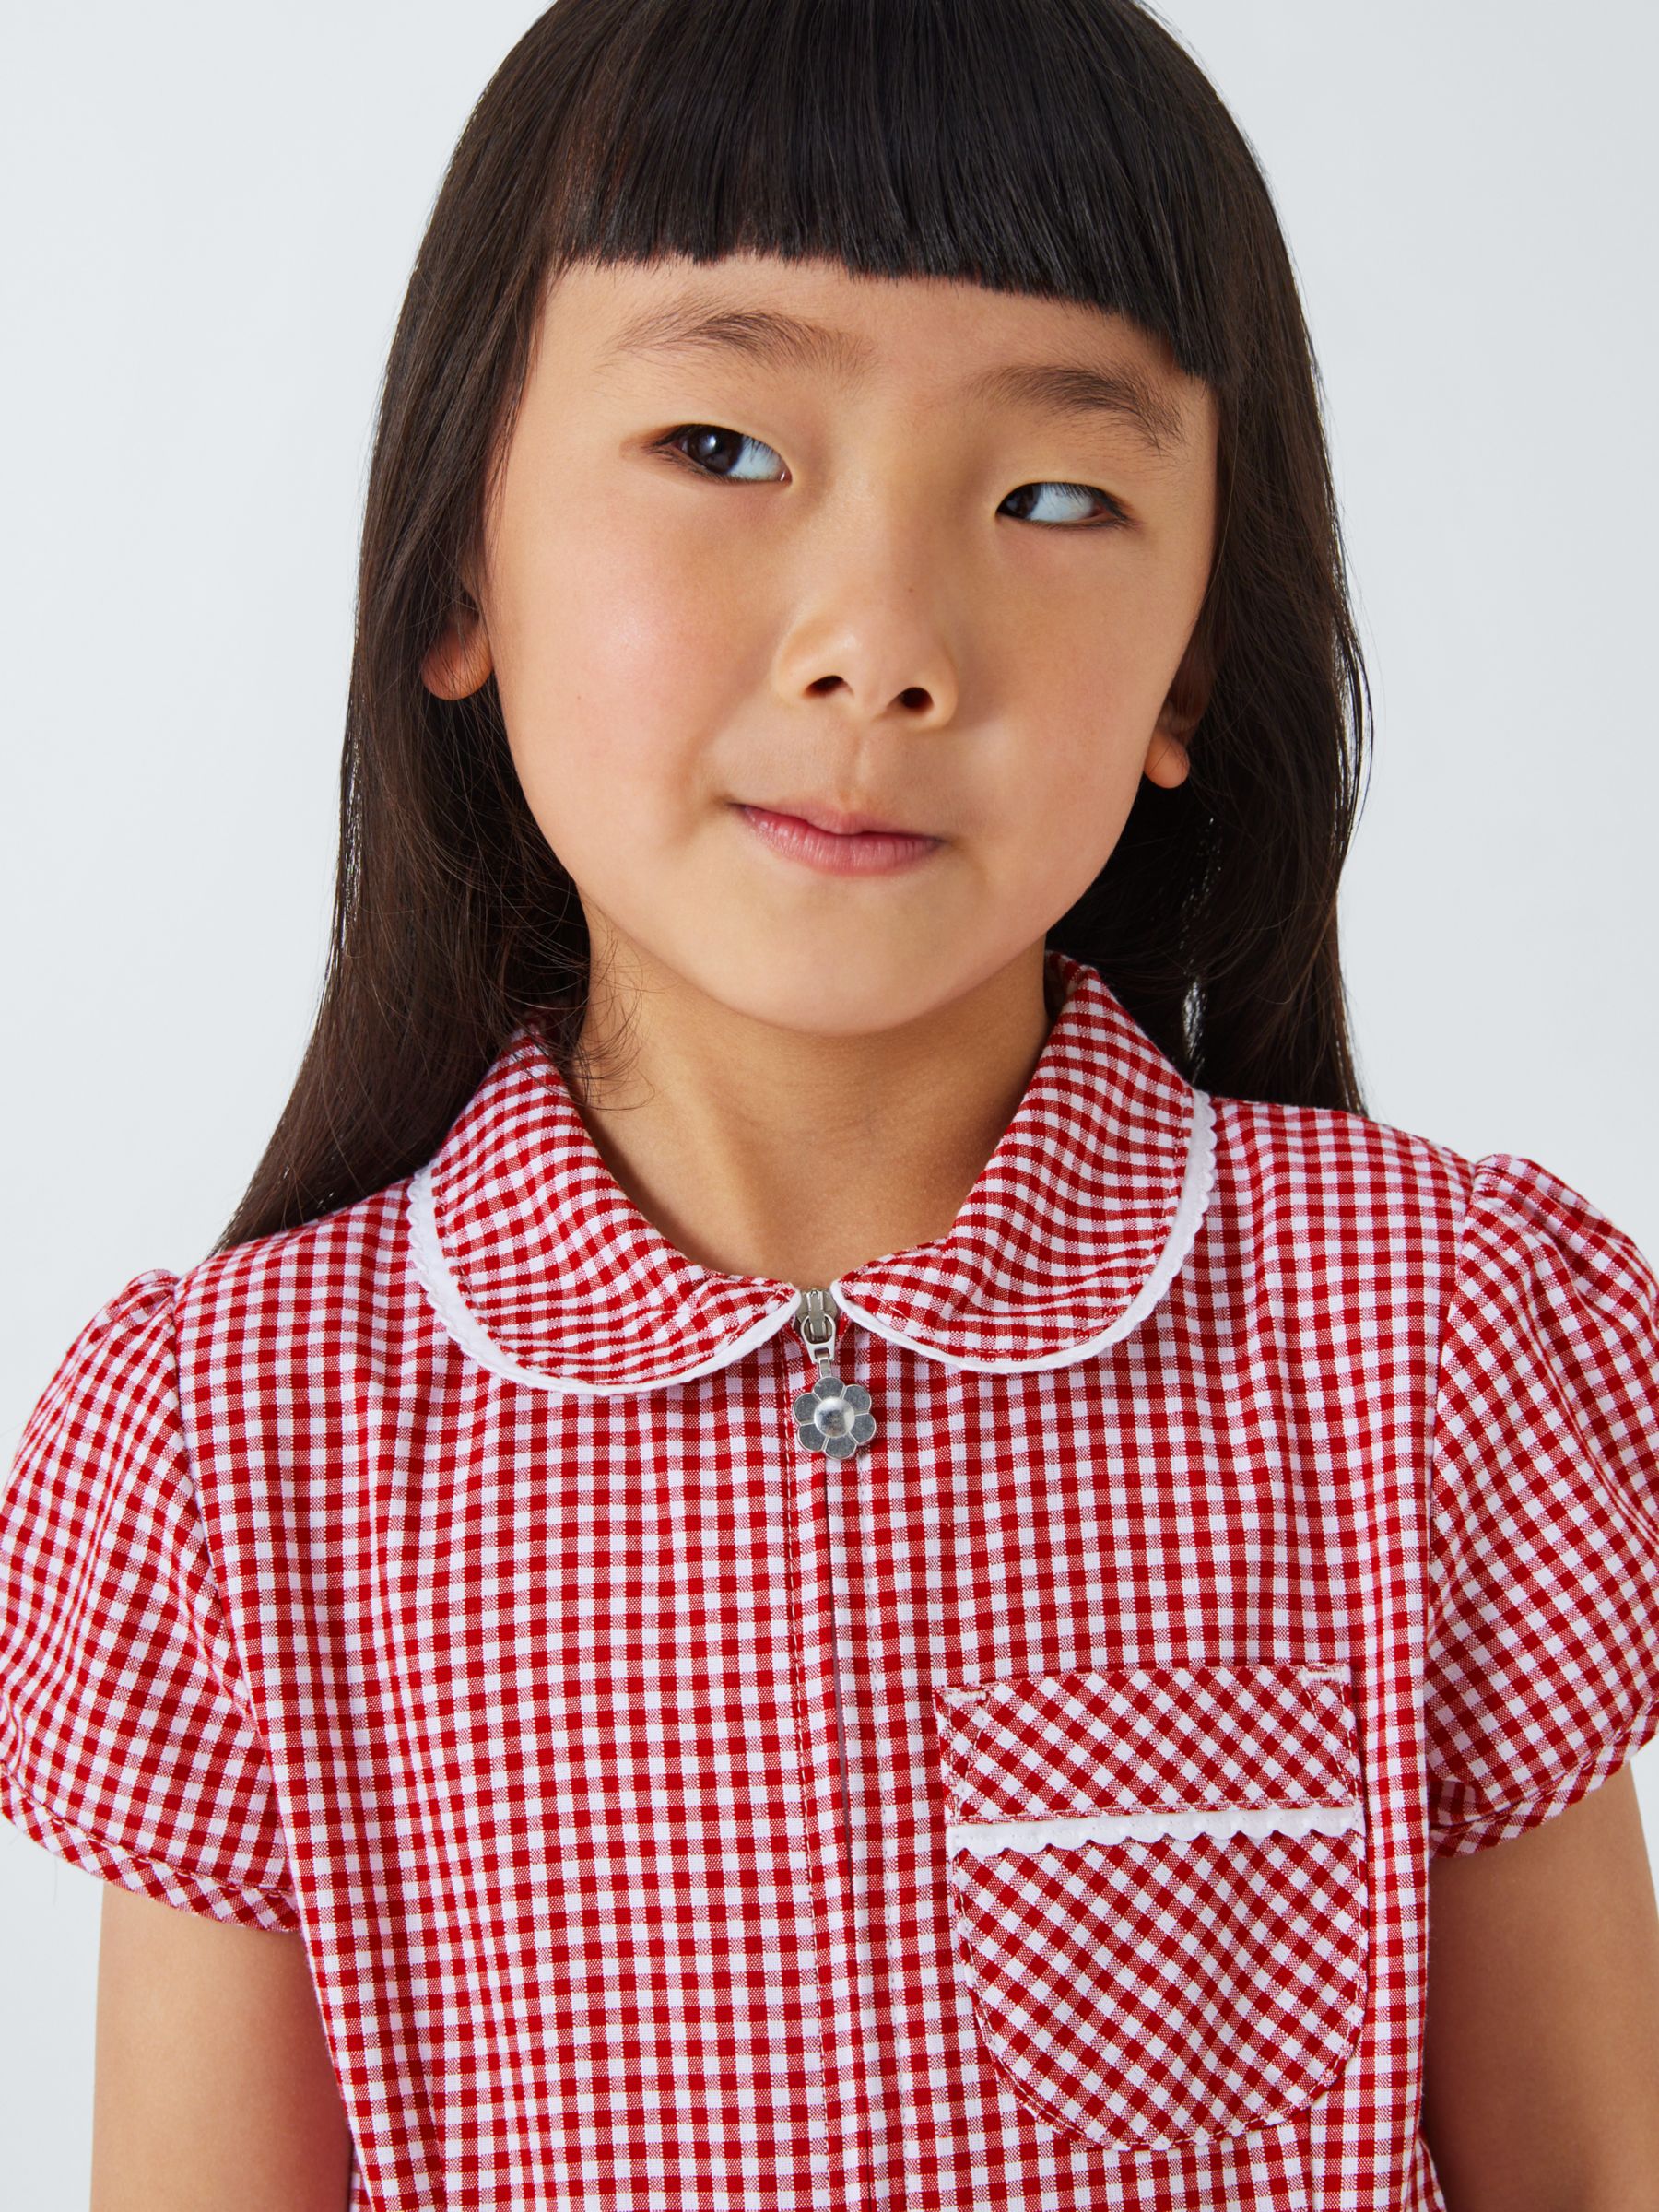 Buy John Lewis Kids' School Gingham A-Line Summer Dress Online at johnlewis.com